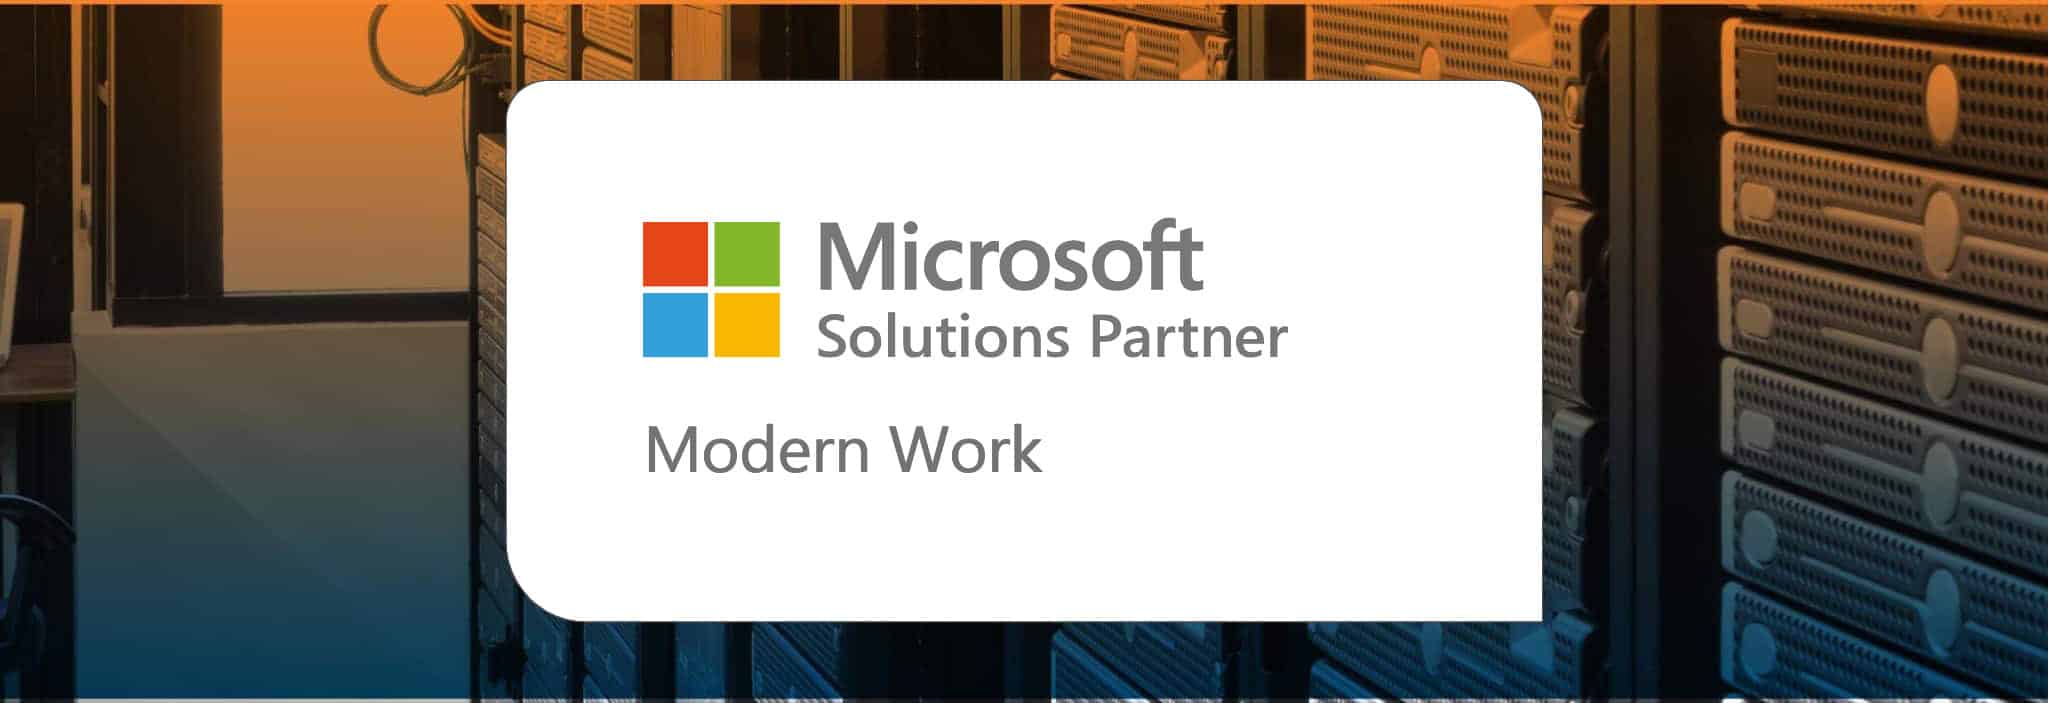 Microsoft Solutions Partner Logo